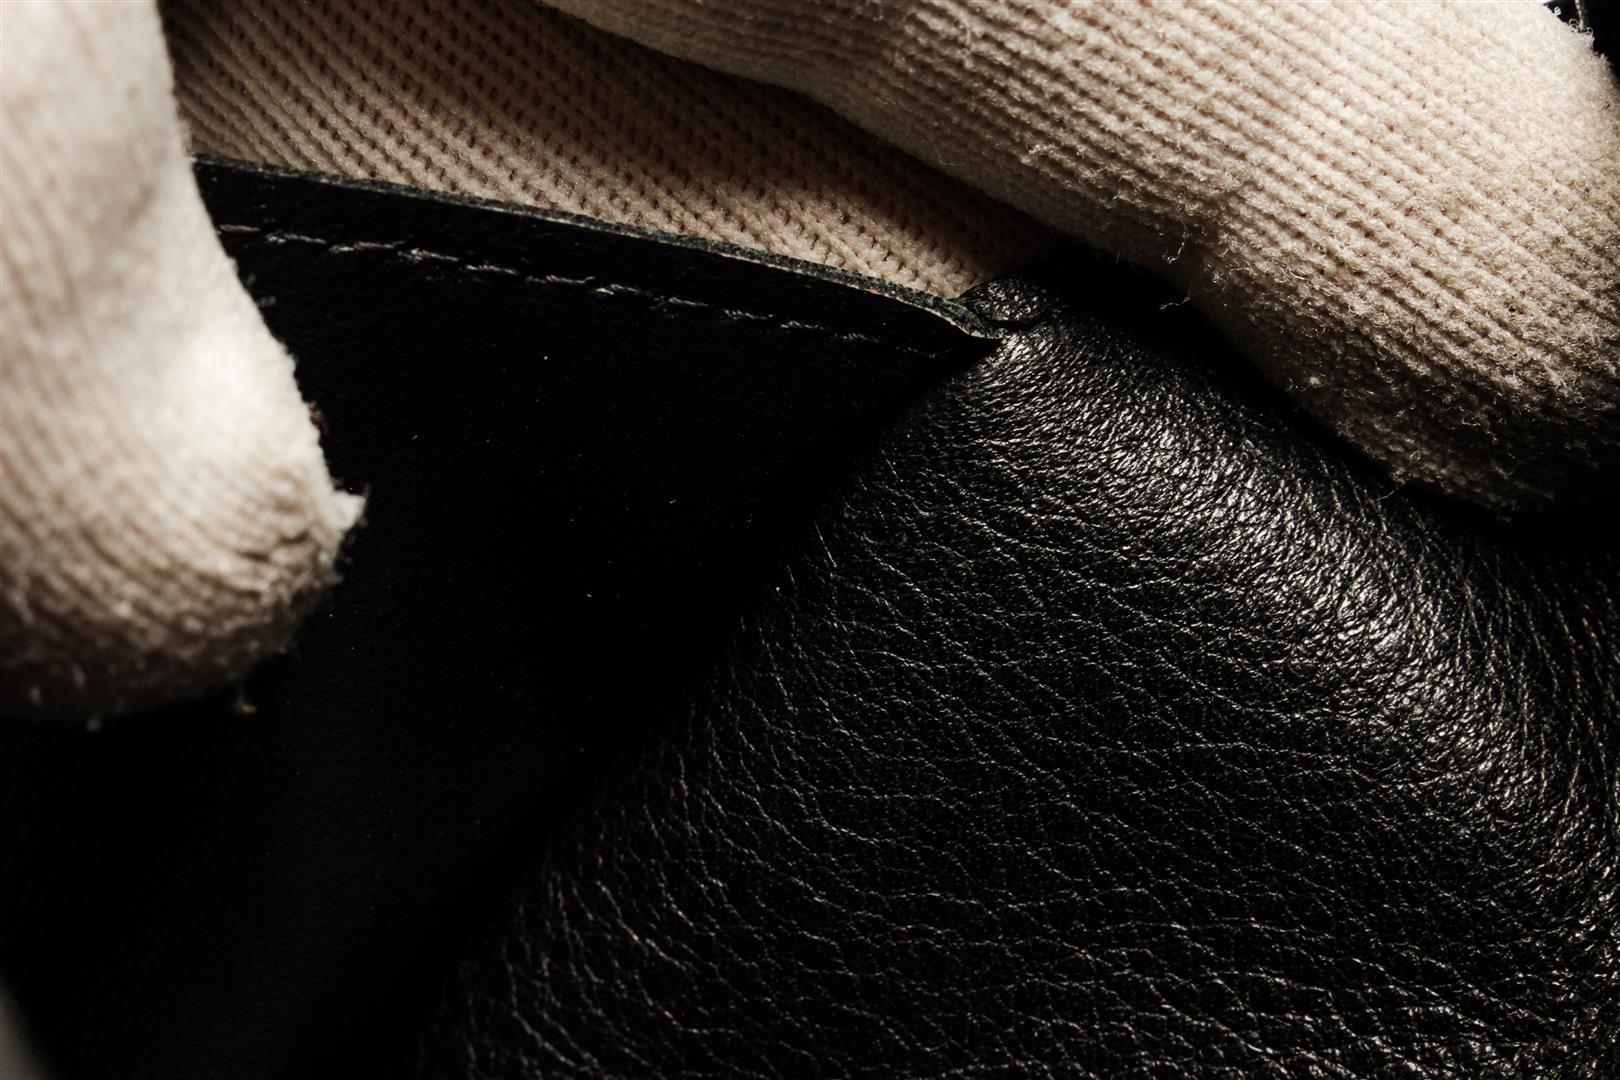 Louis Vuitton Black Leather Brazza Wallet